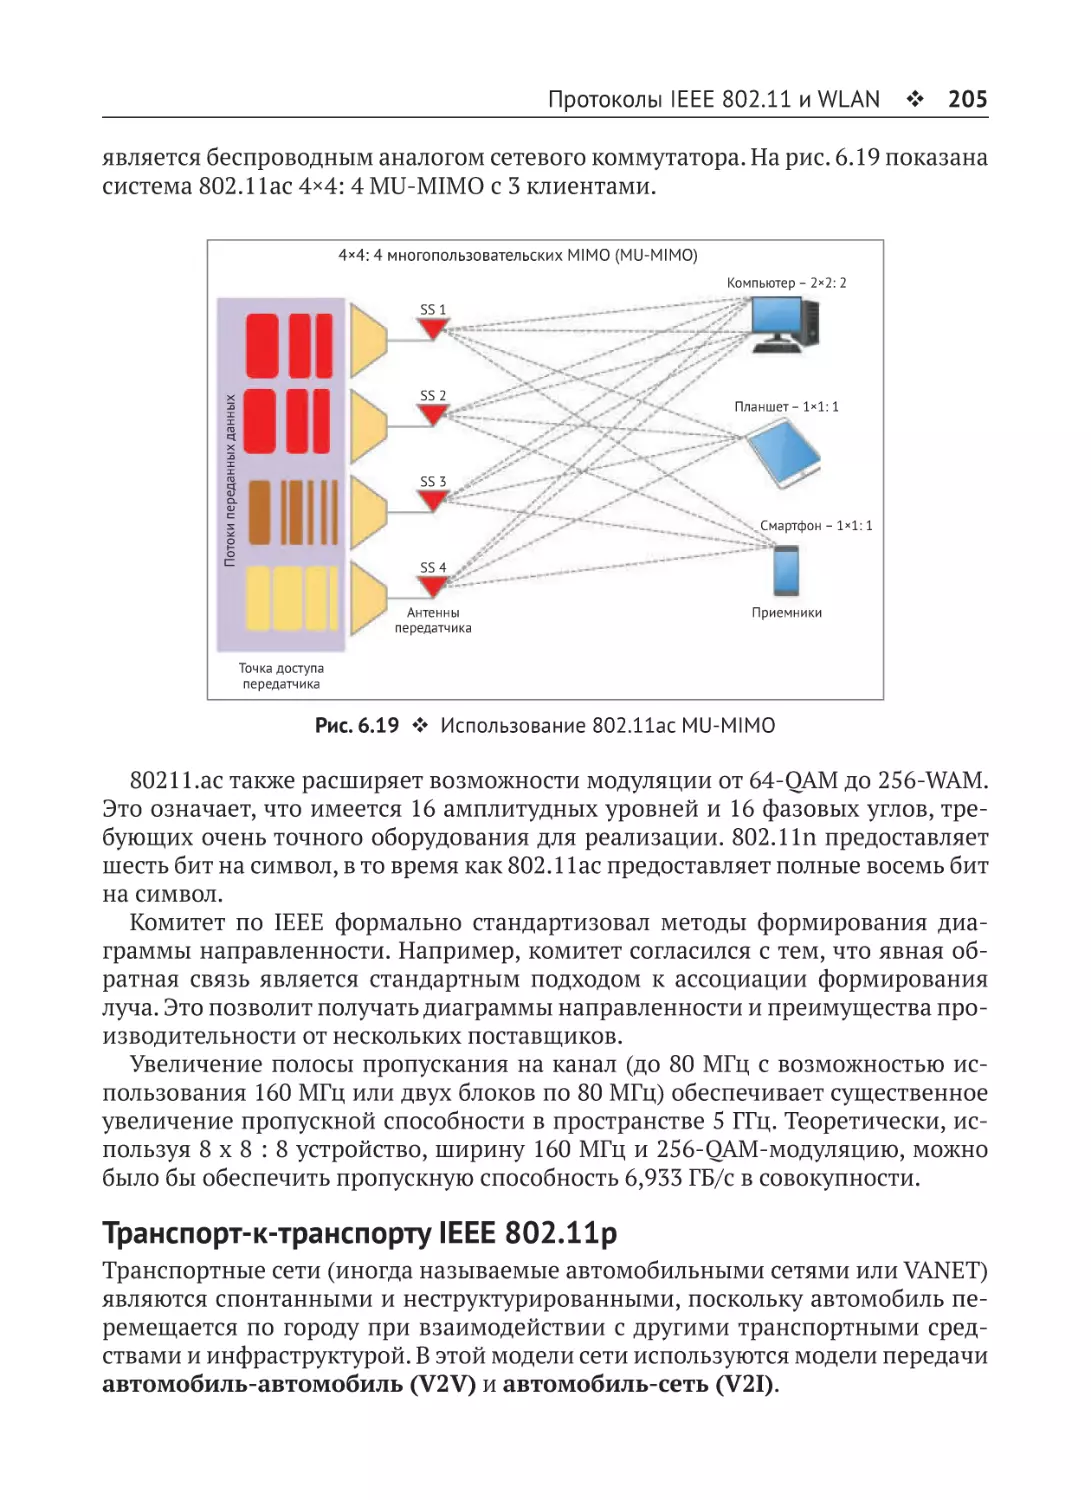 Транспорт-к-транспорту IEEE 802.11p